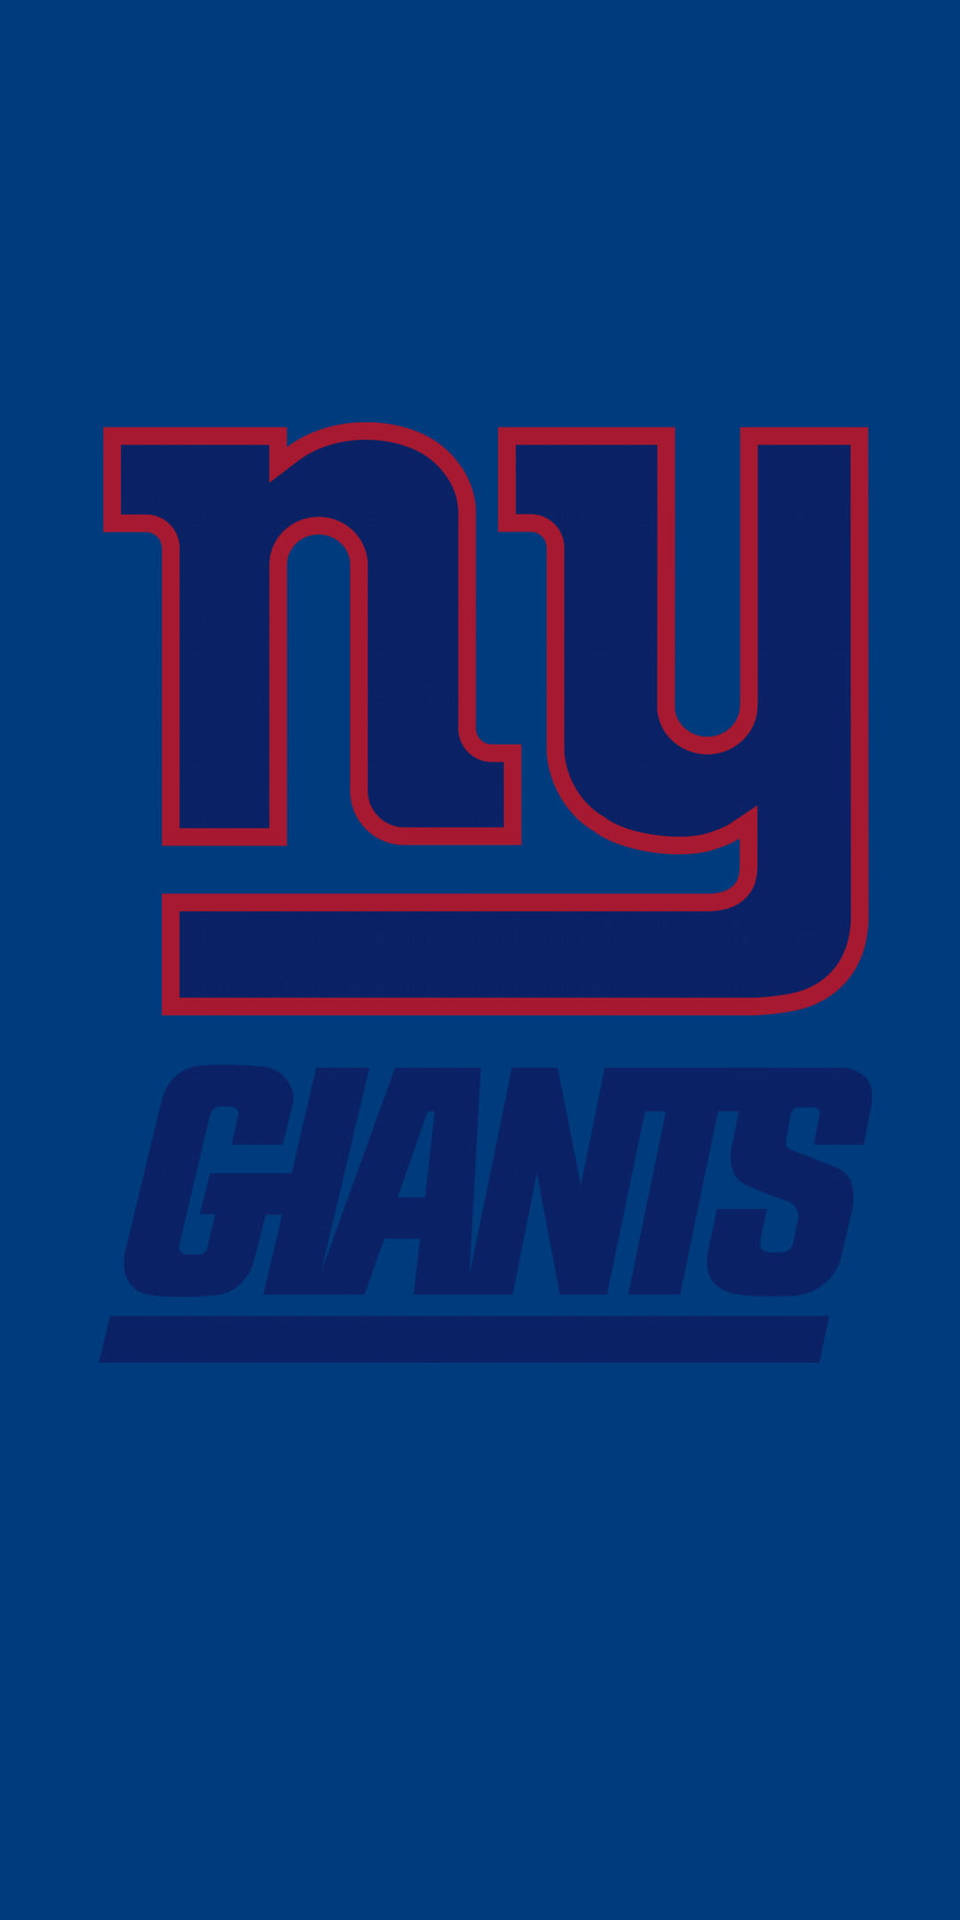 Download New York Giants NFL Team Logo Wallpaper